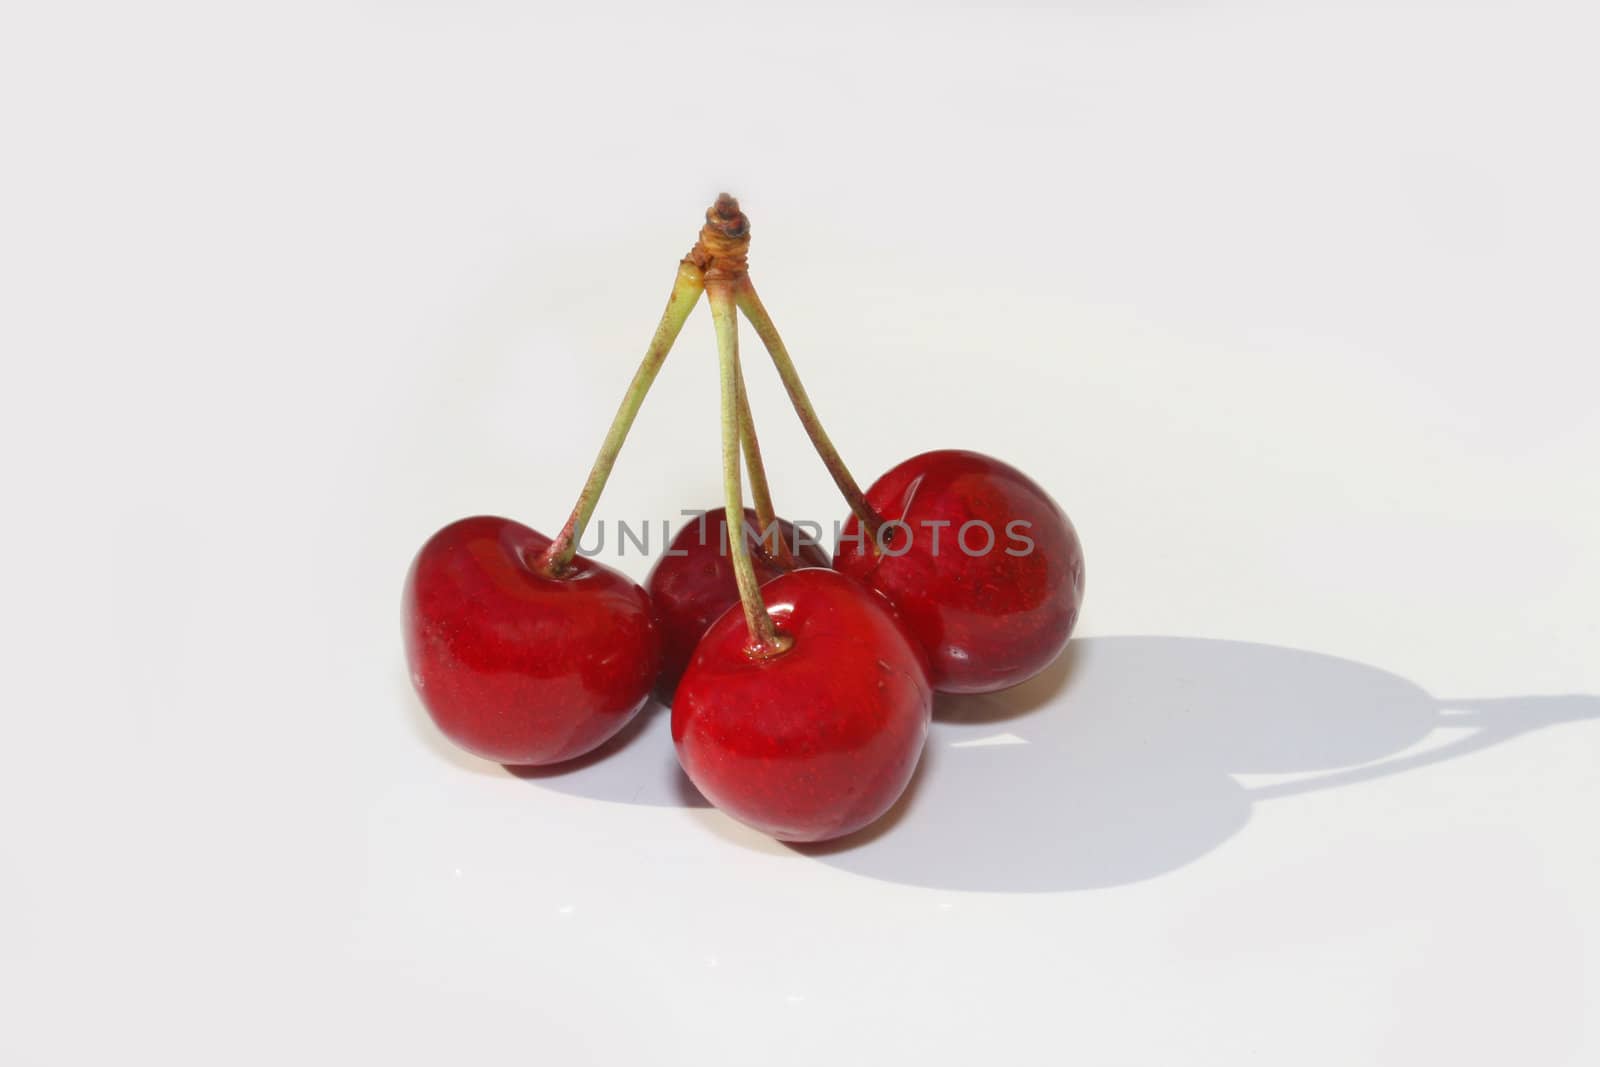 Cherries against white background